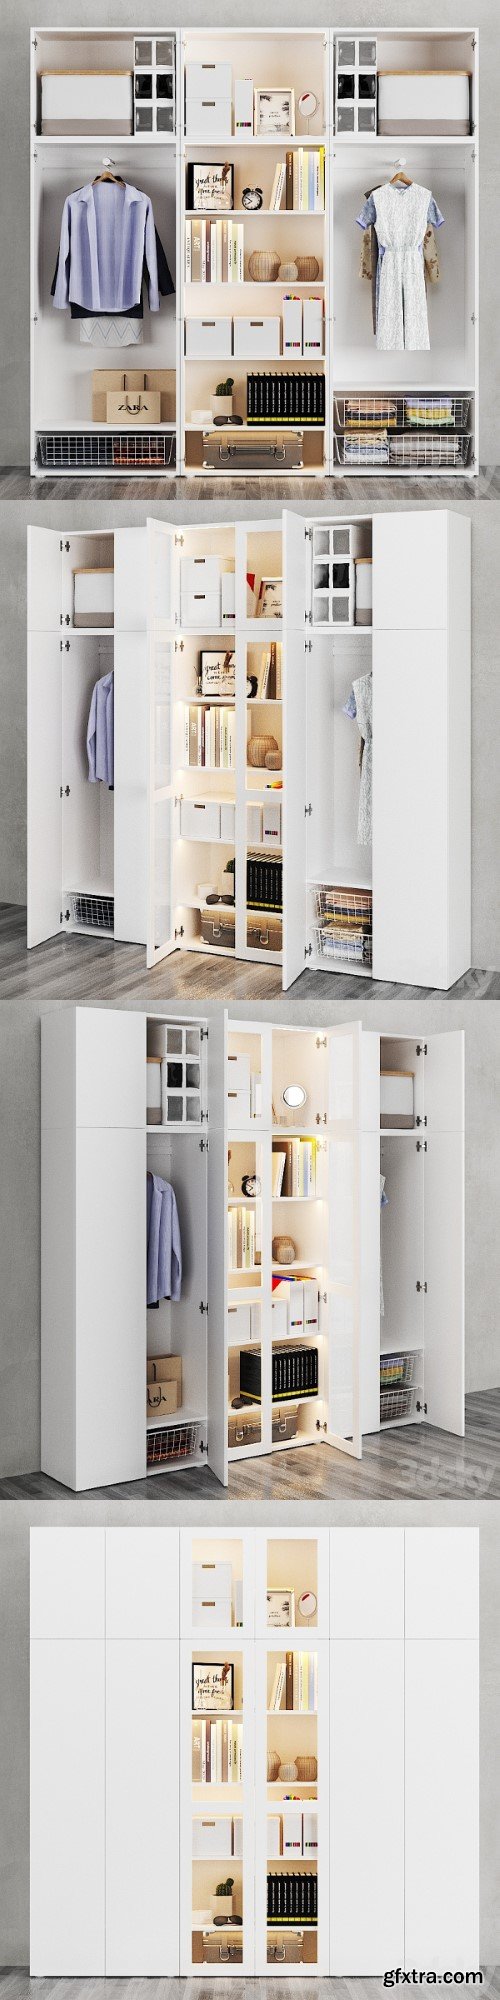 Ikea | Ophus Combined Storage Cabinet